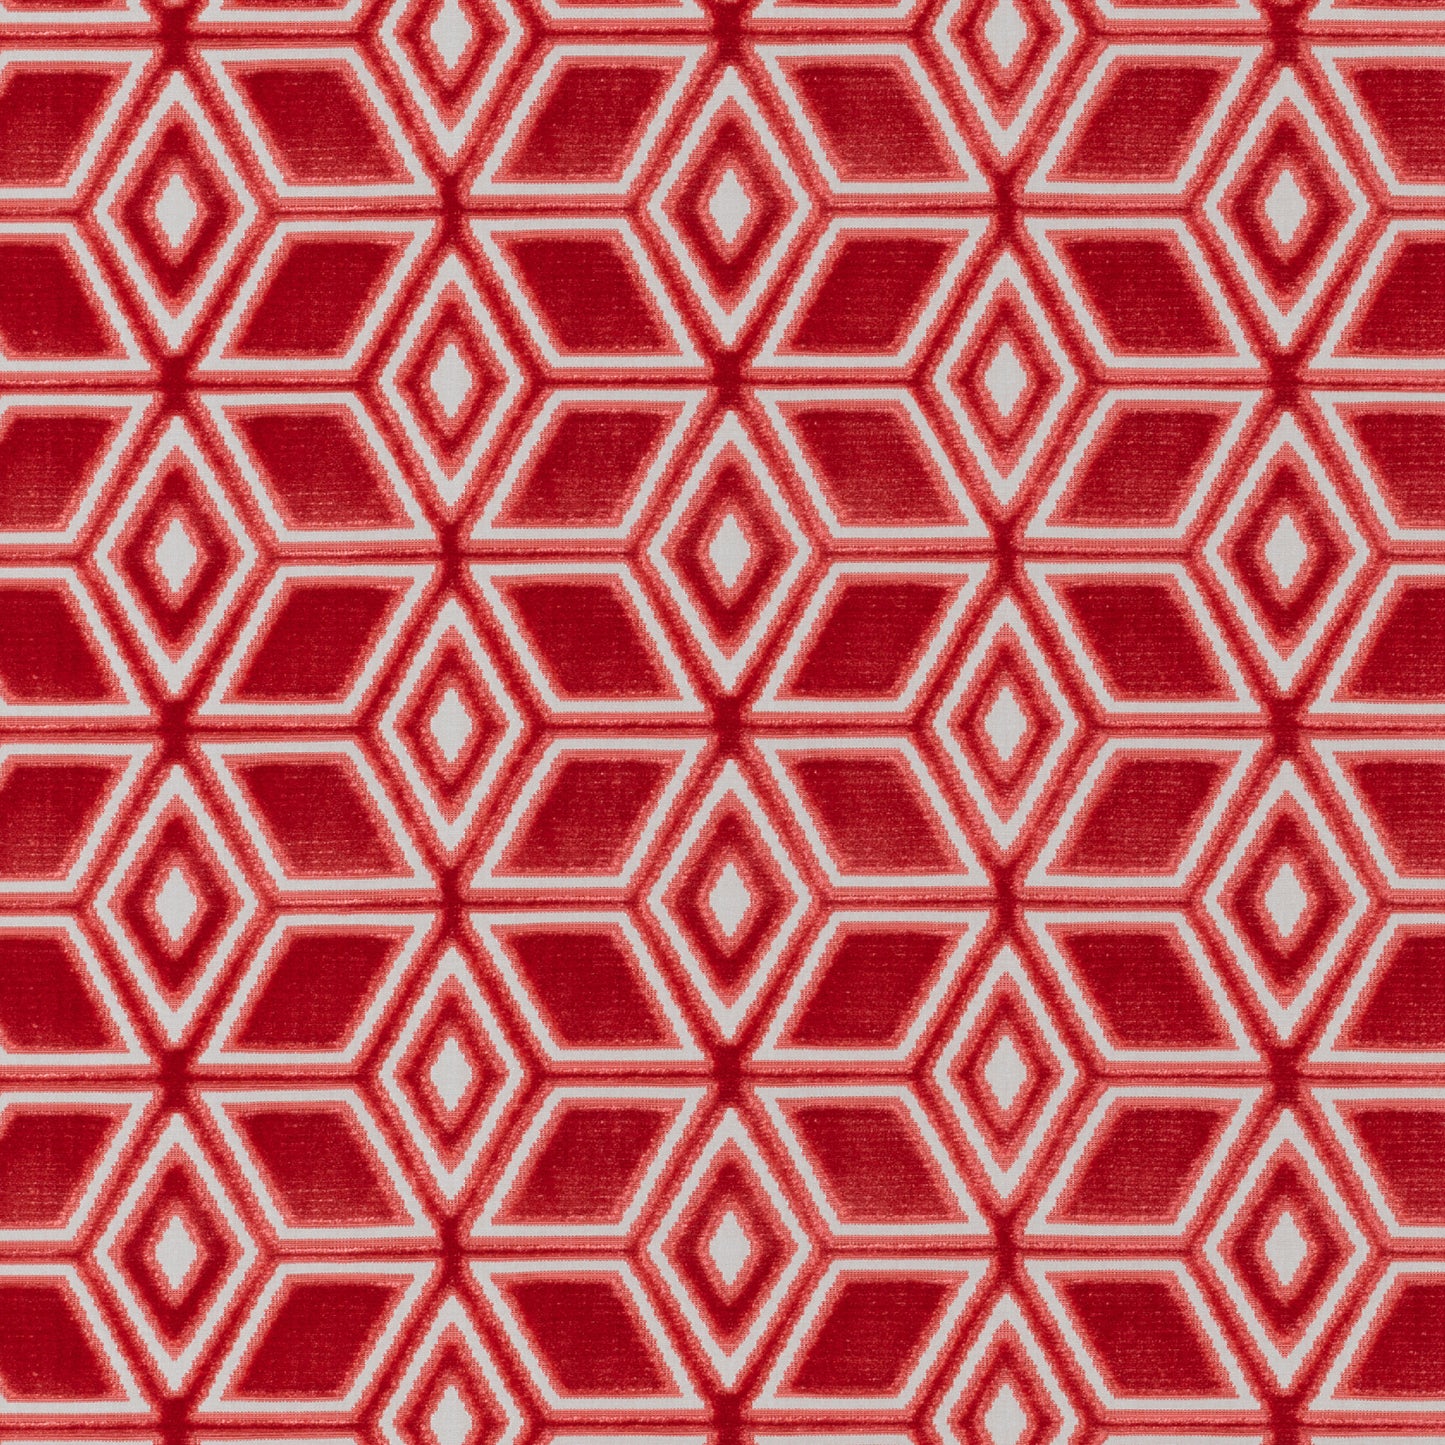 Purchase  Ann French Fabric SKU AW72985  pattern name  Jardin Maze Velvet